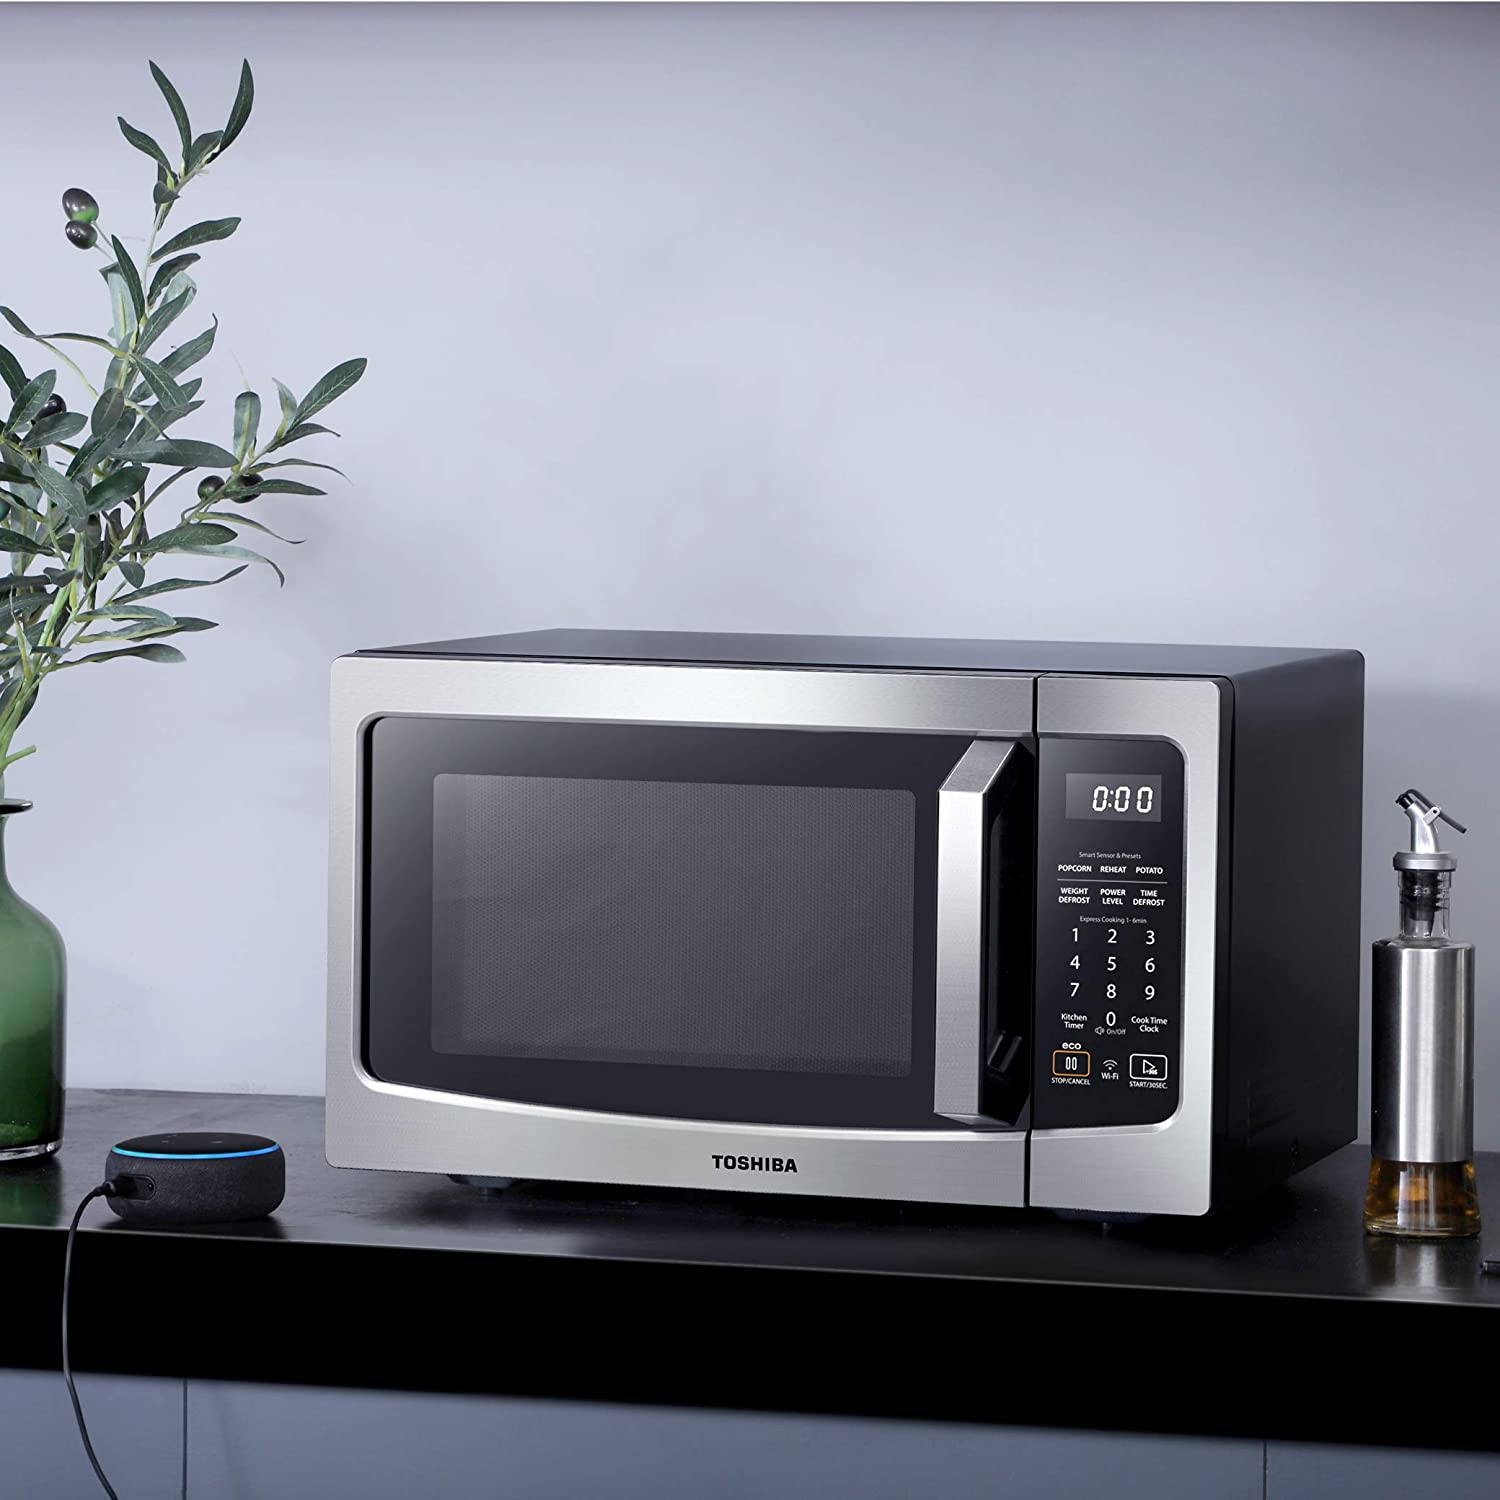 Toshiba Smart Microwave Oven That Works With Alexa | Jikonitaste